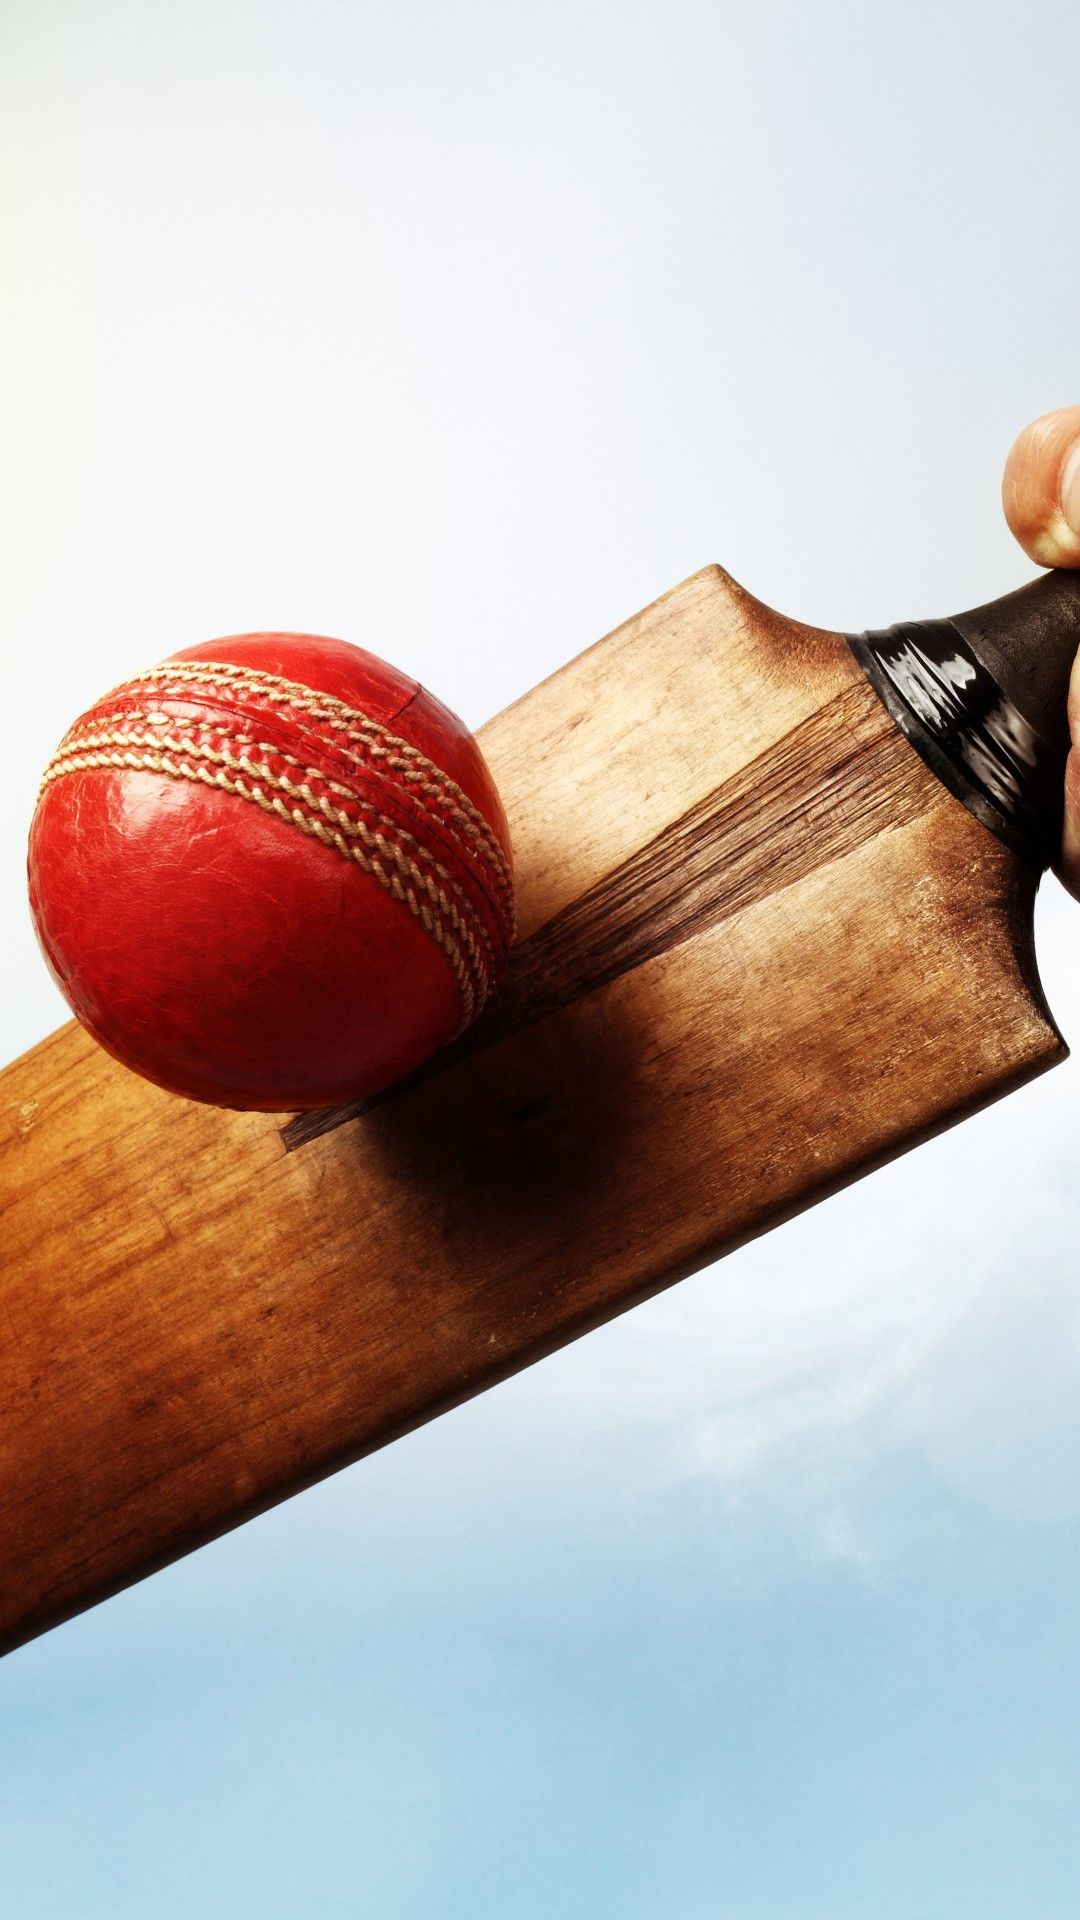 🔥 Hardik Pandya Play Cricket Full HD Wallpaper Photos | MyGodImages